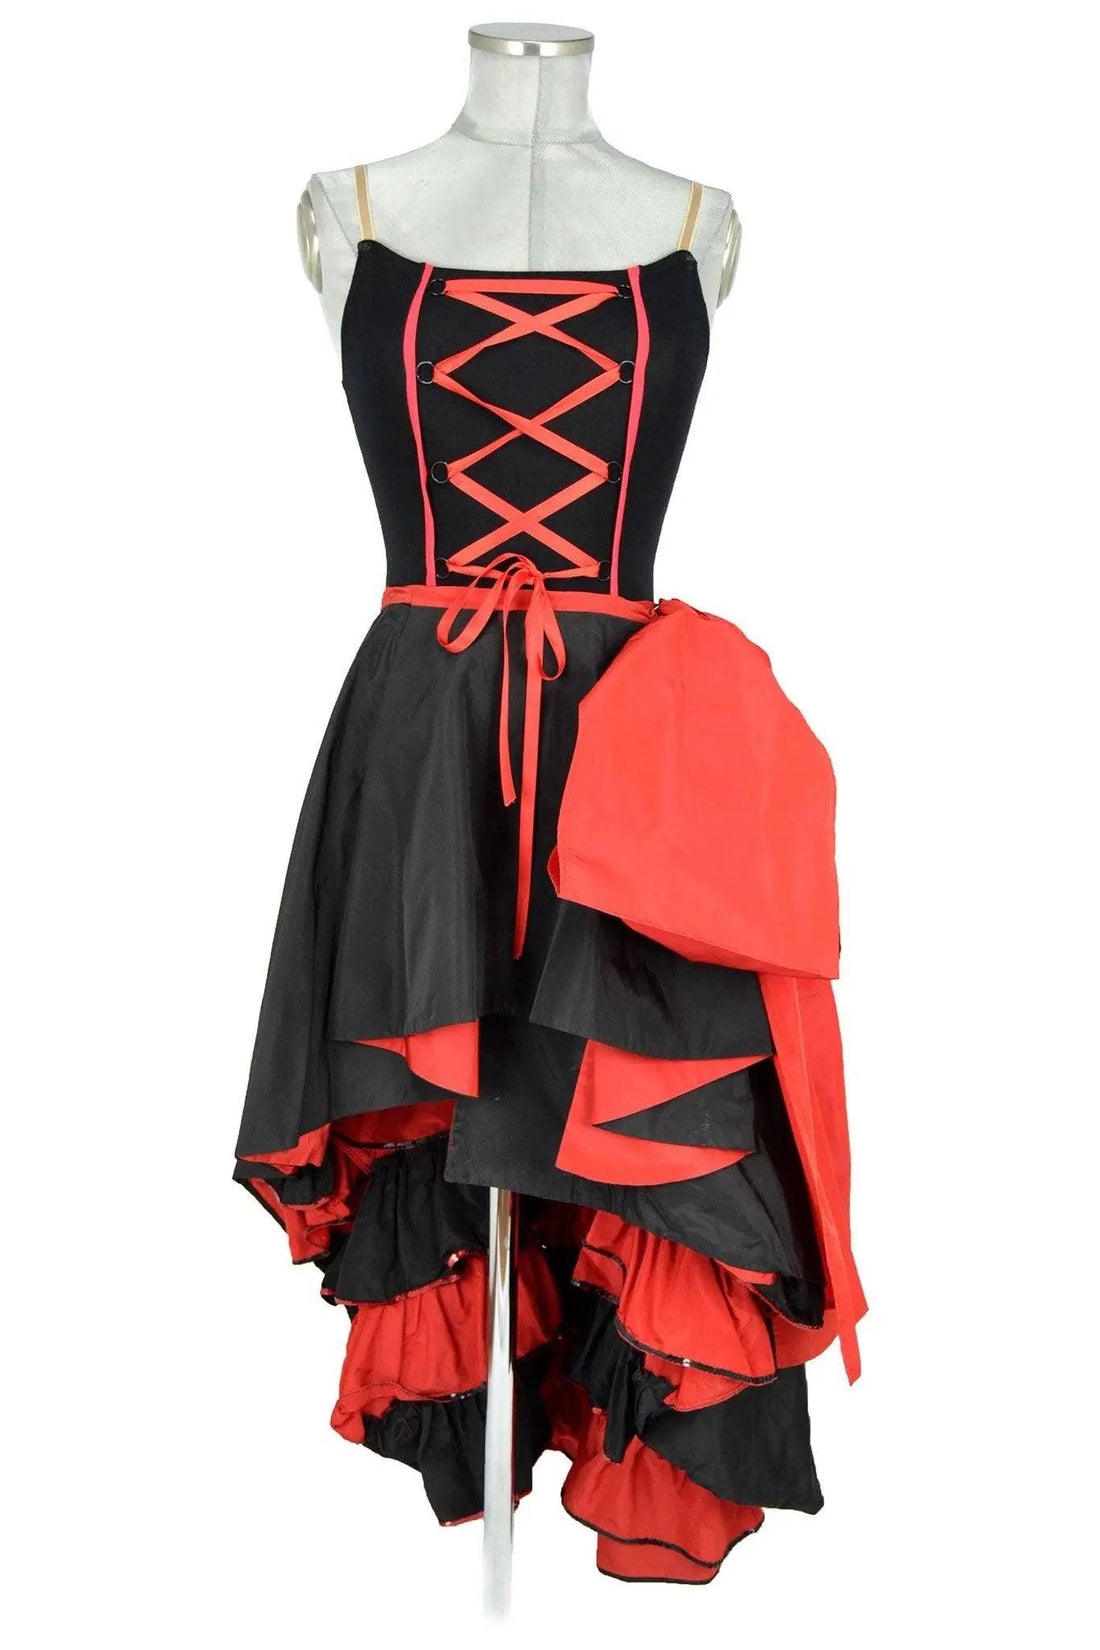 Costume donna spagnola o gitana stile Carmen , Esmeralda - danza